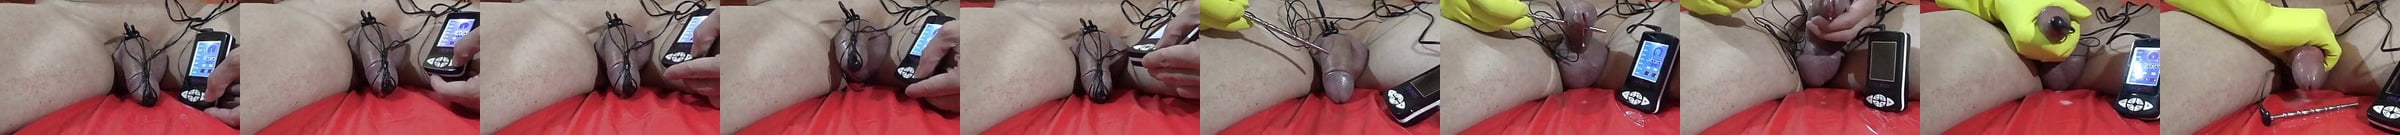 Chastity Belt With Locked Anal Plug Man Porn F9 Xhamster